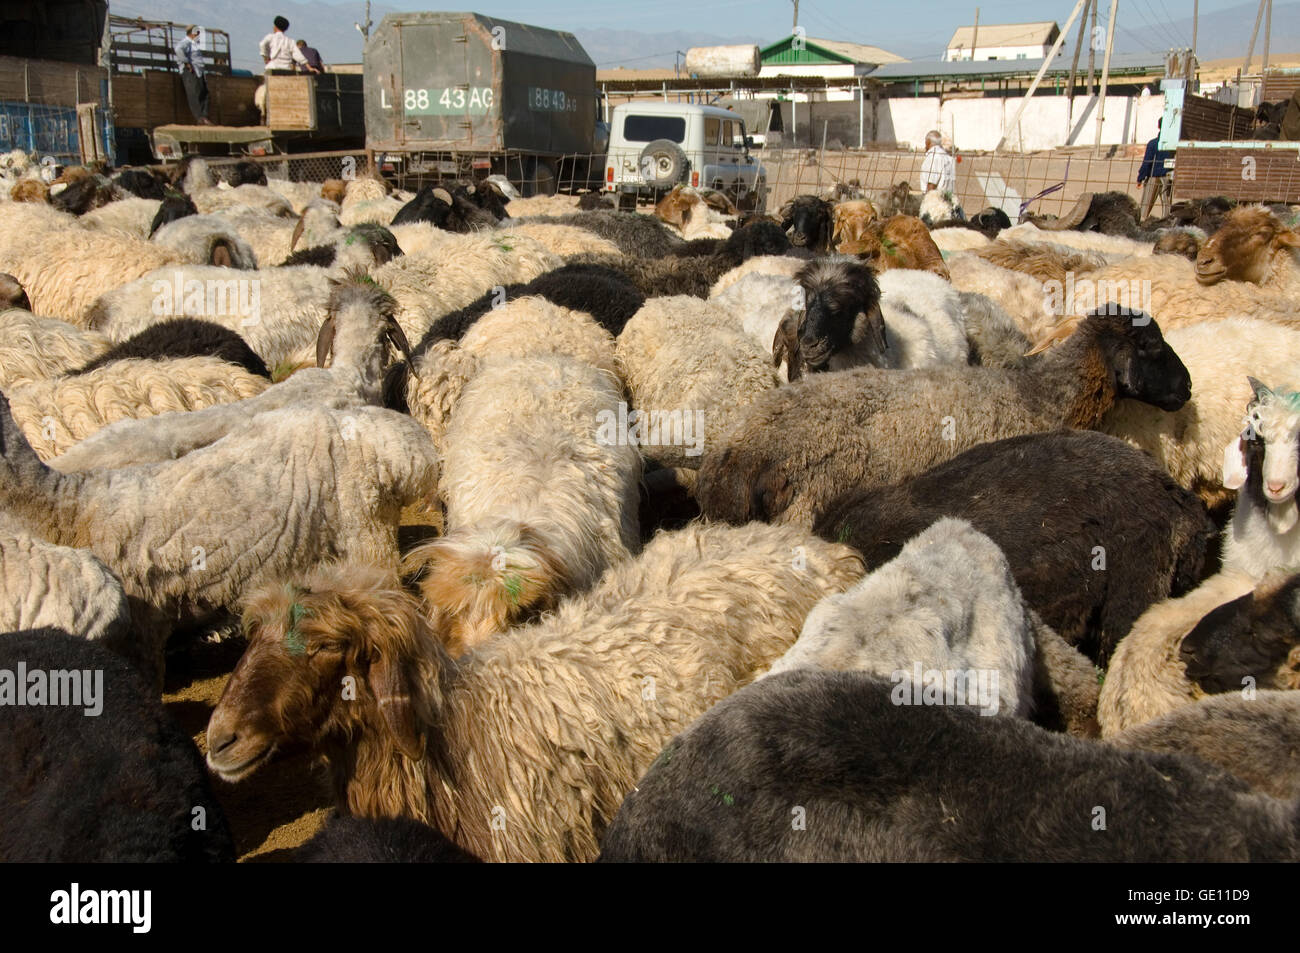 Tolkuchka bazaar, selling sheeps and goats, Ashgabat, Turkmenistan Stock Photo